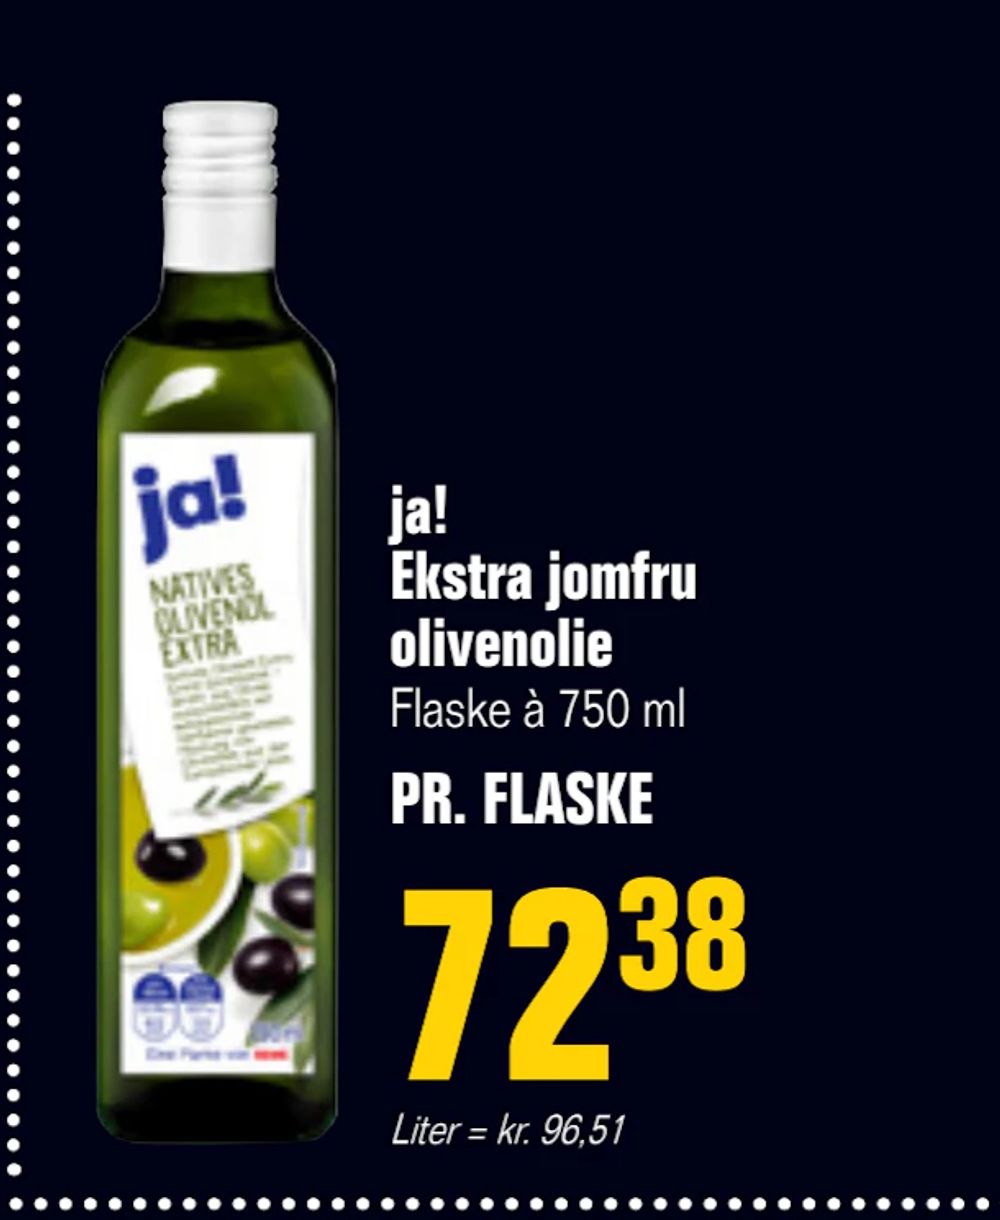 Tilbud på ja! Ekstra jomfru olivenolie fra Poetzsch Padborg til 72,38 kr.